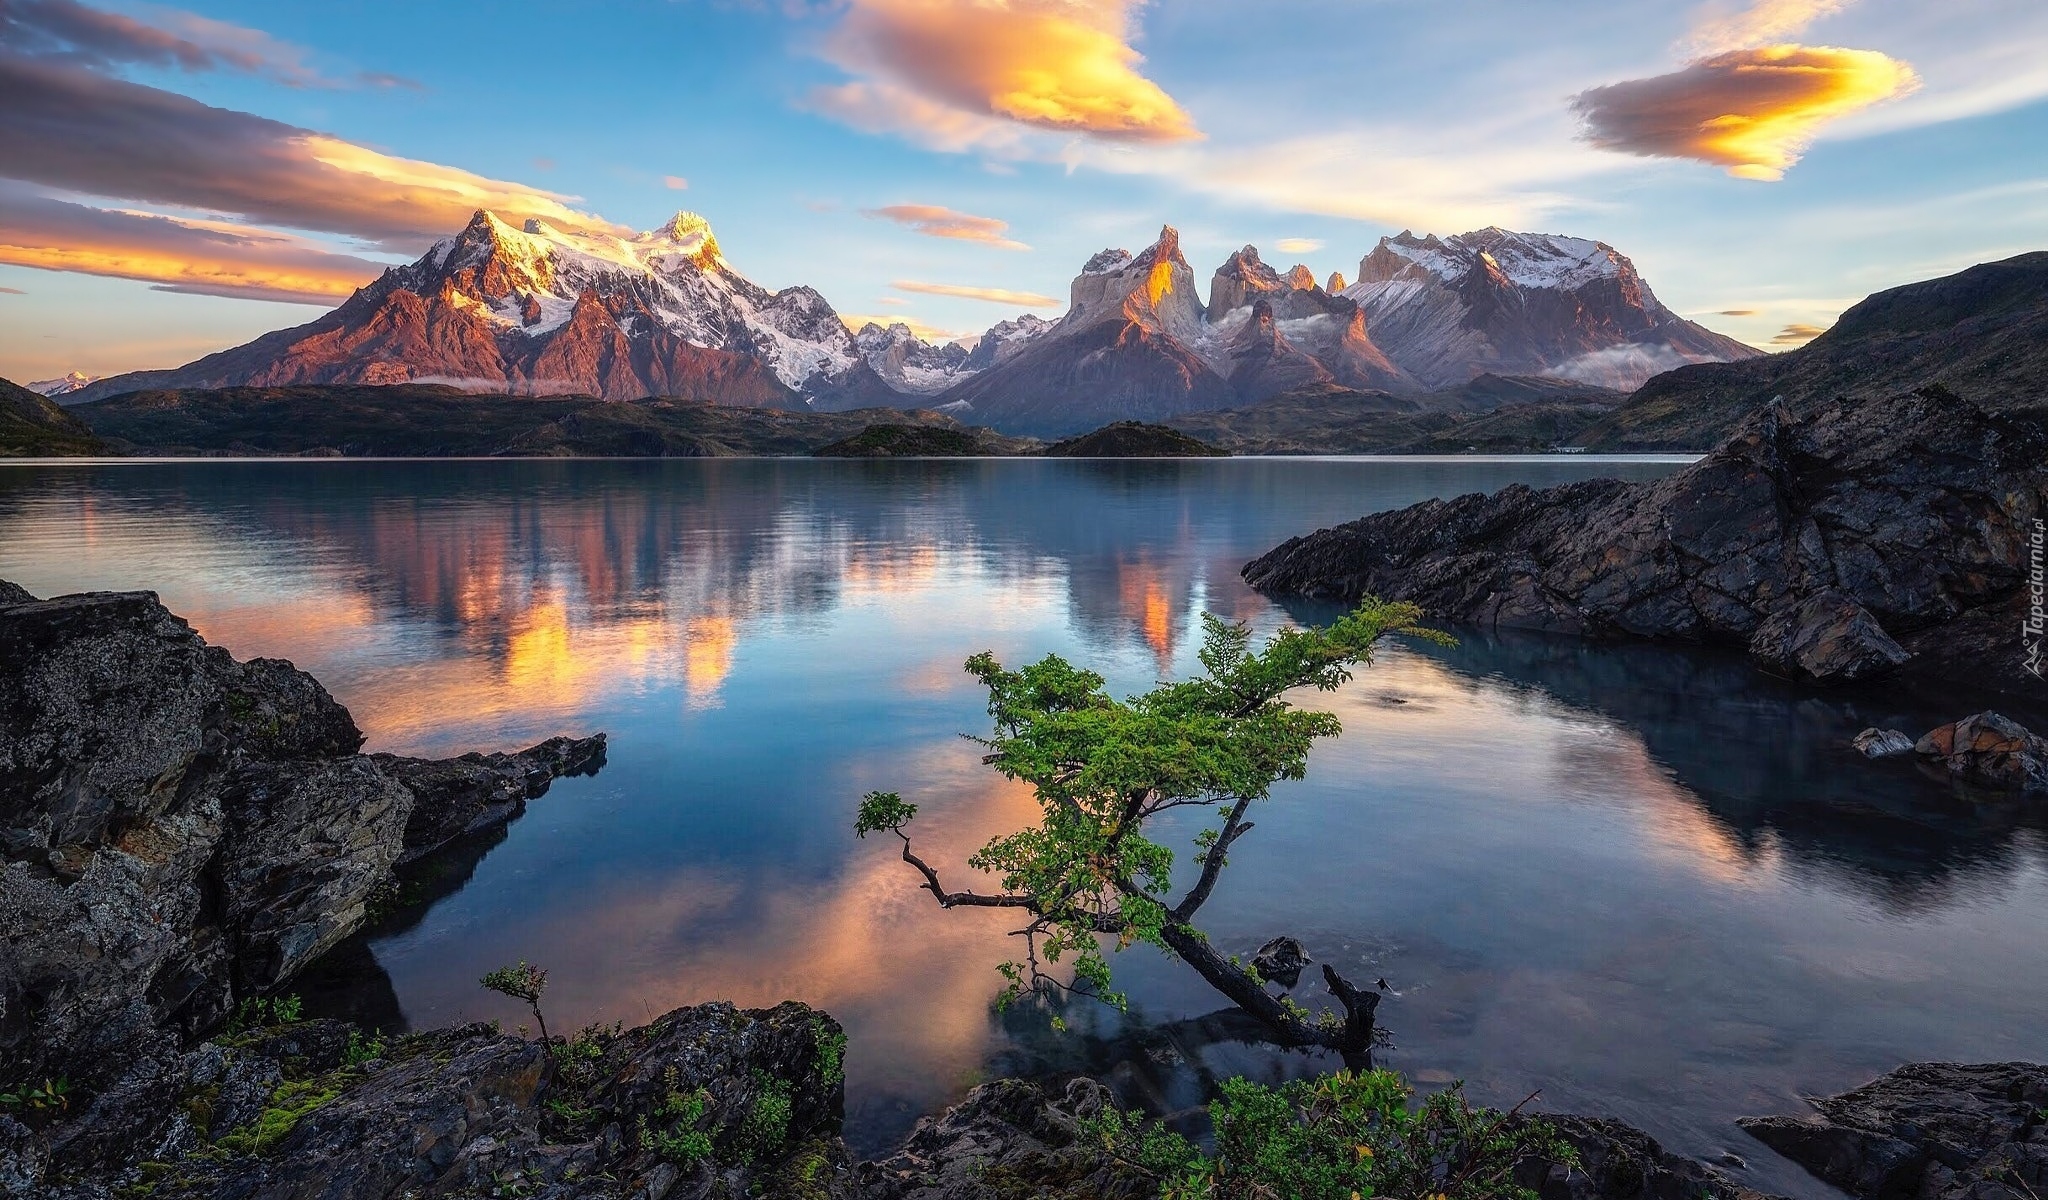 Park Narodowy Torres del Paine, Jezioro Pehoe, Drzewo, Skały, Góry Cordillera del Paine, Patagonia, Chile